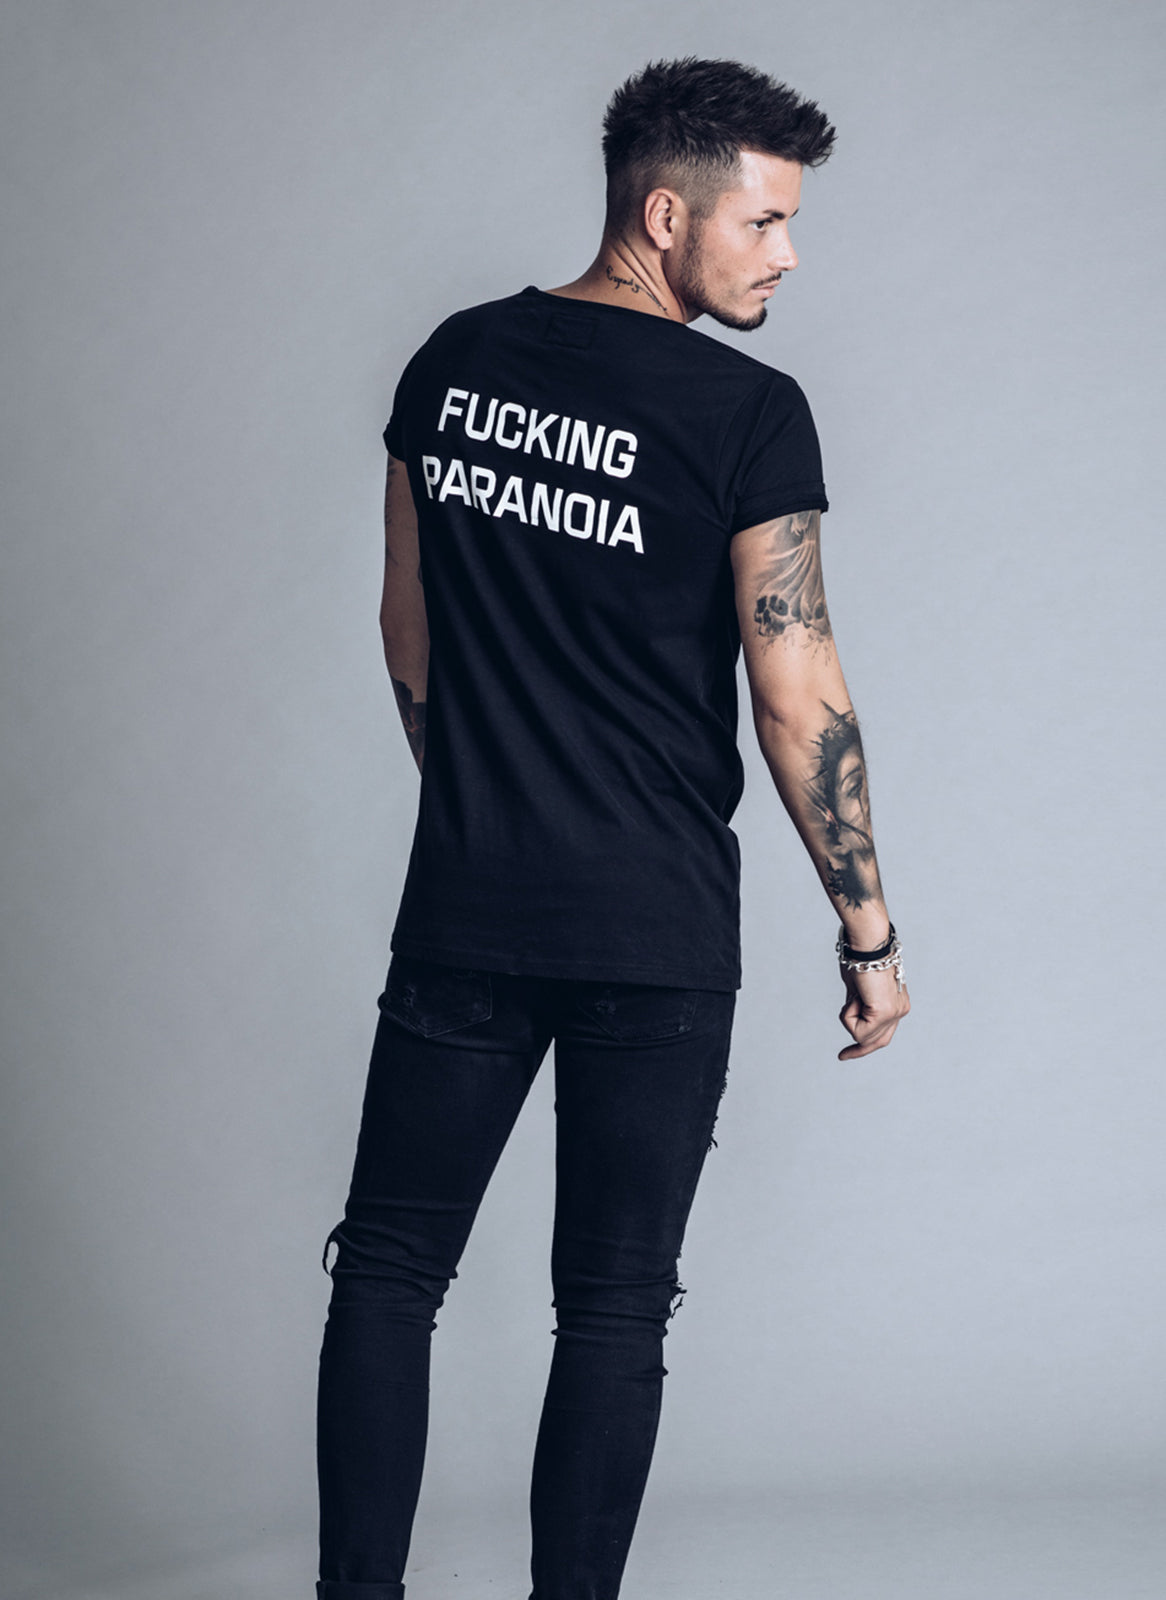 Fucking Paranoia - Black t-shirt - We love techno